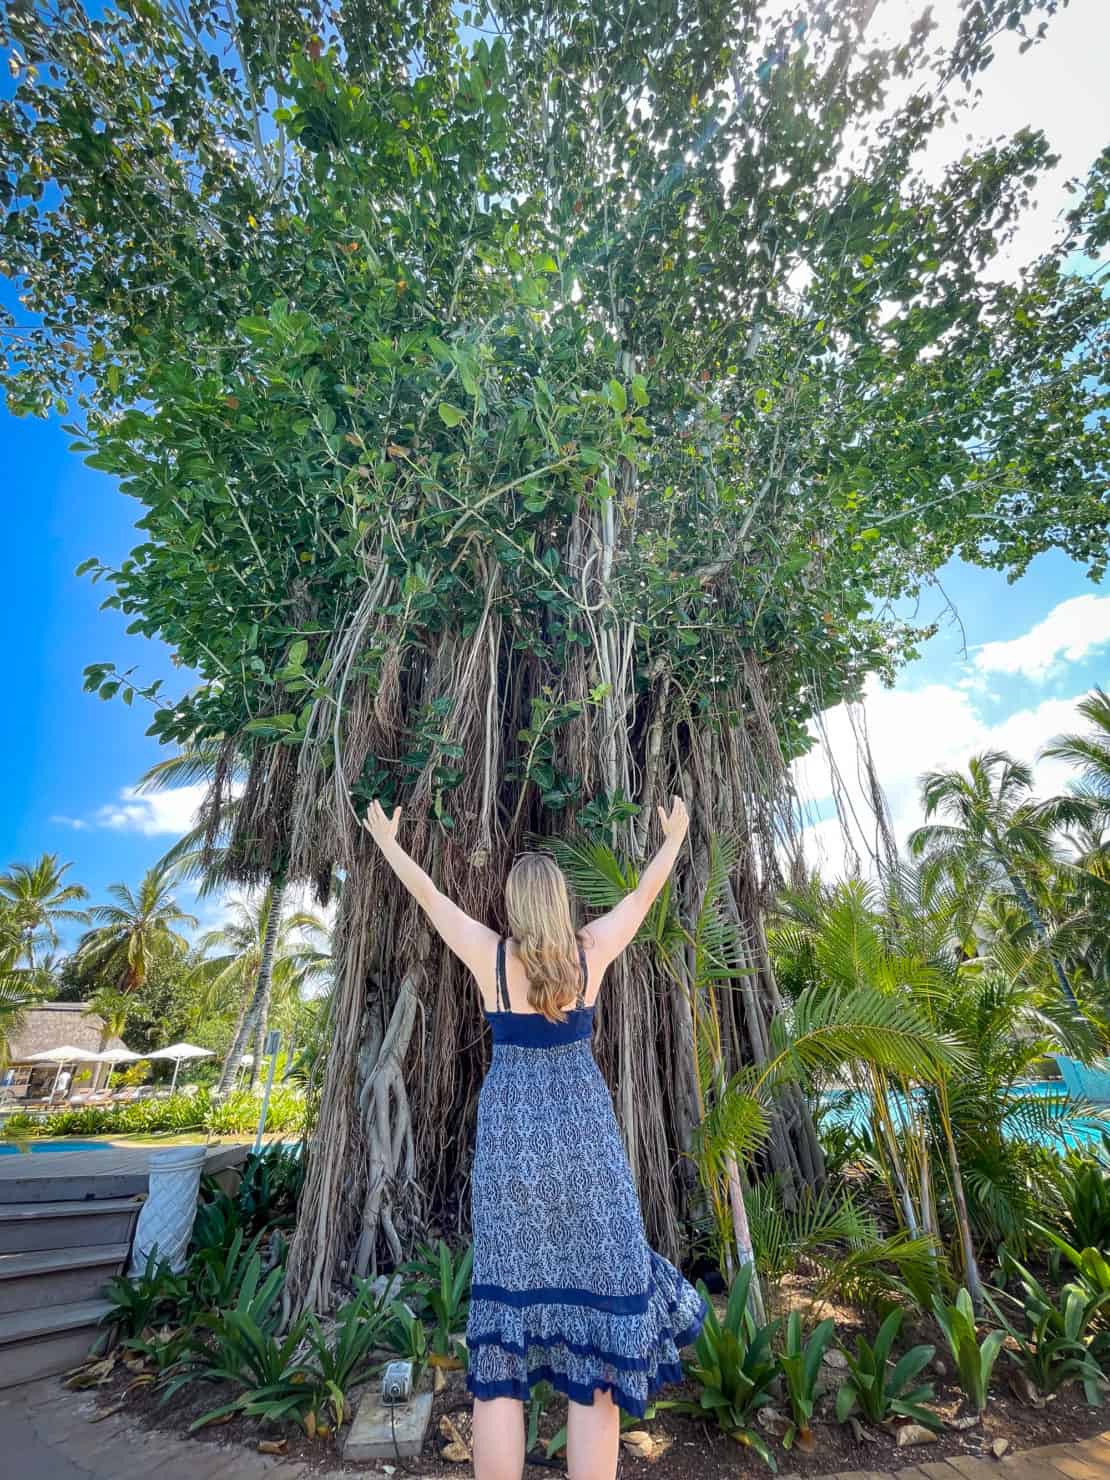 Abigail King hugs a tree in Mauritius